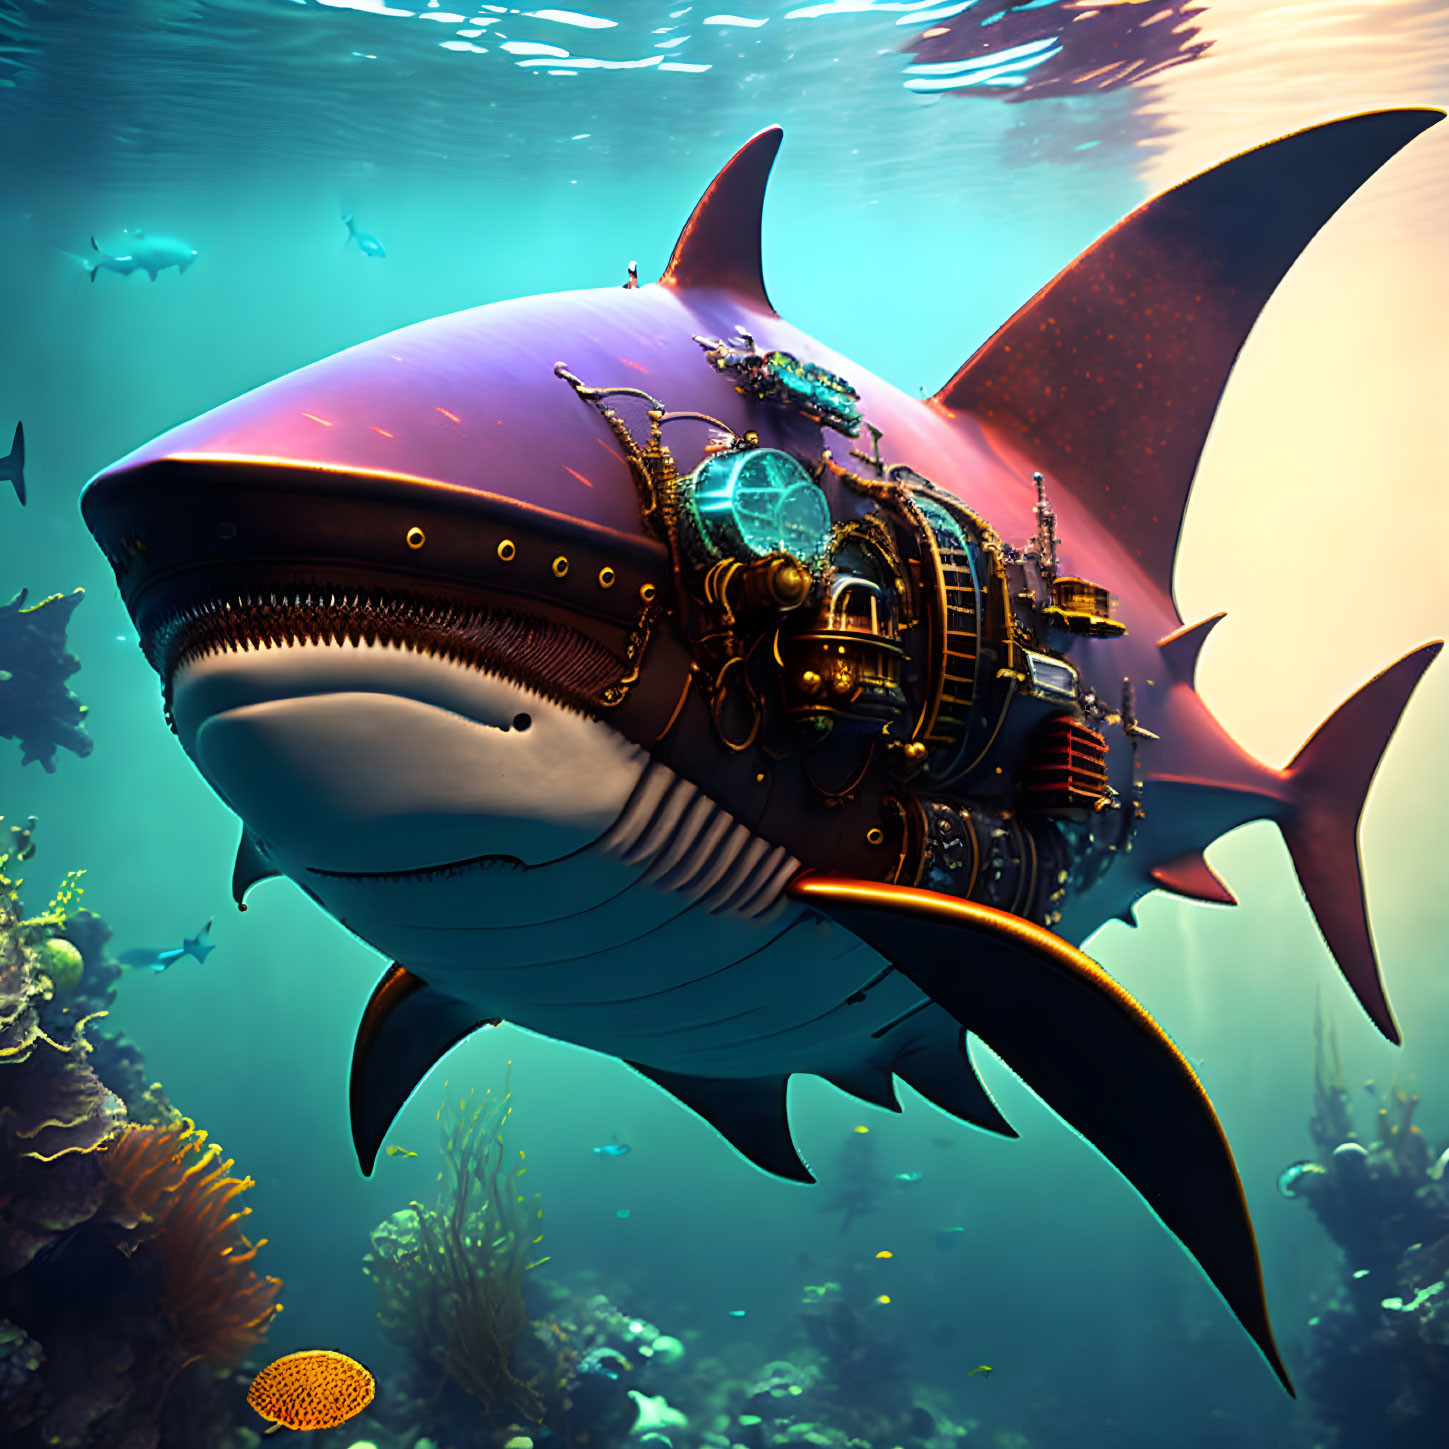 Mechanical shark with gears in underwater scene.